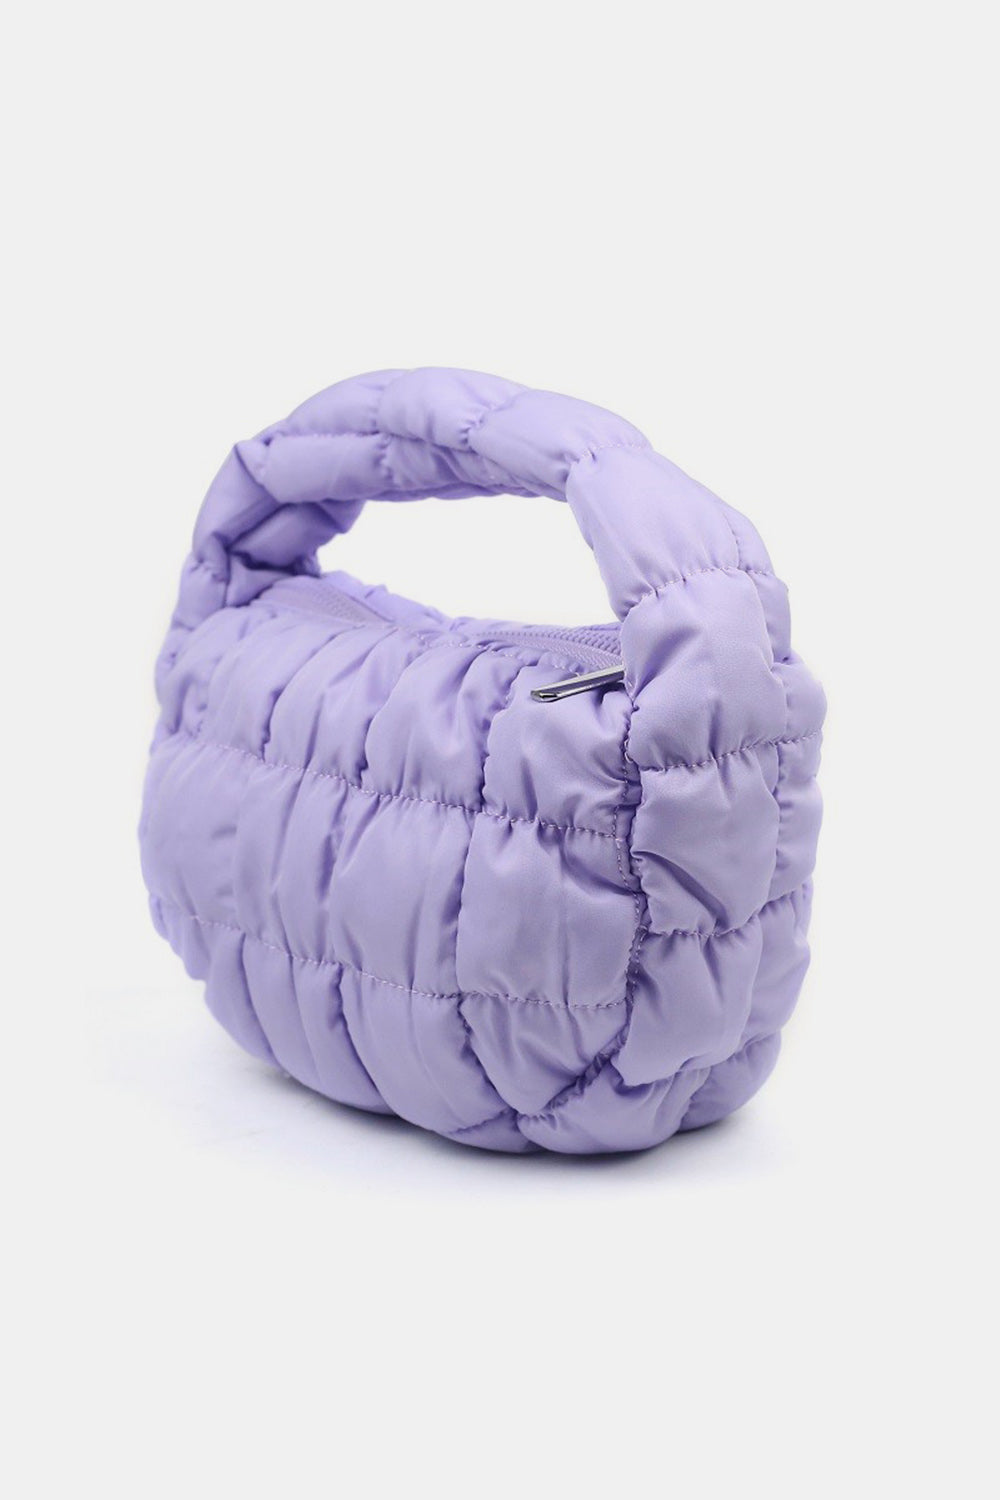 Zenana Quilted Micro Puffy Handbag (3 colors)